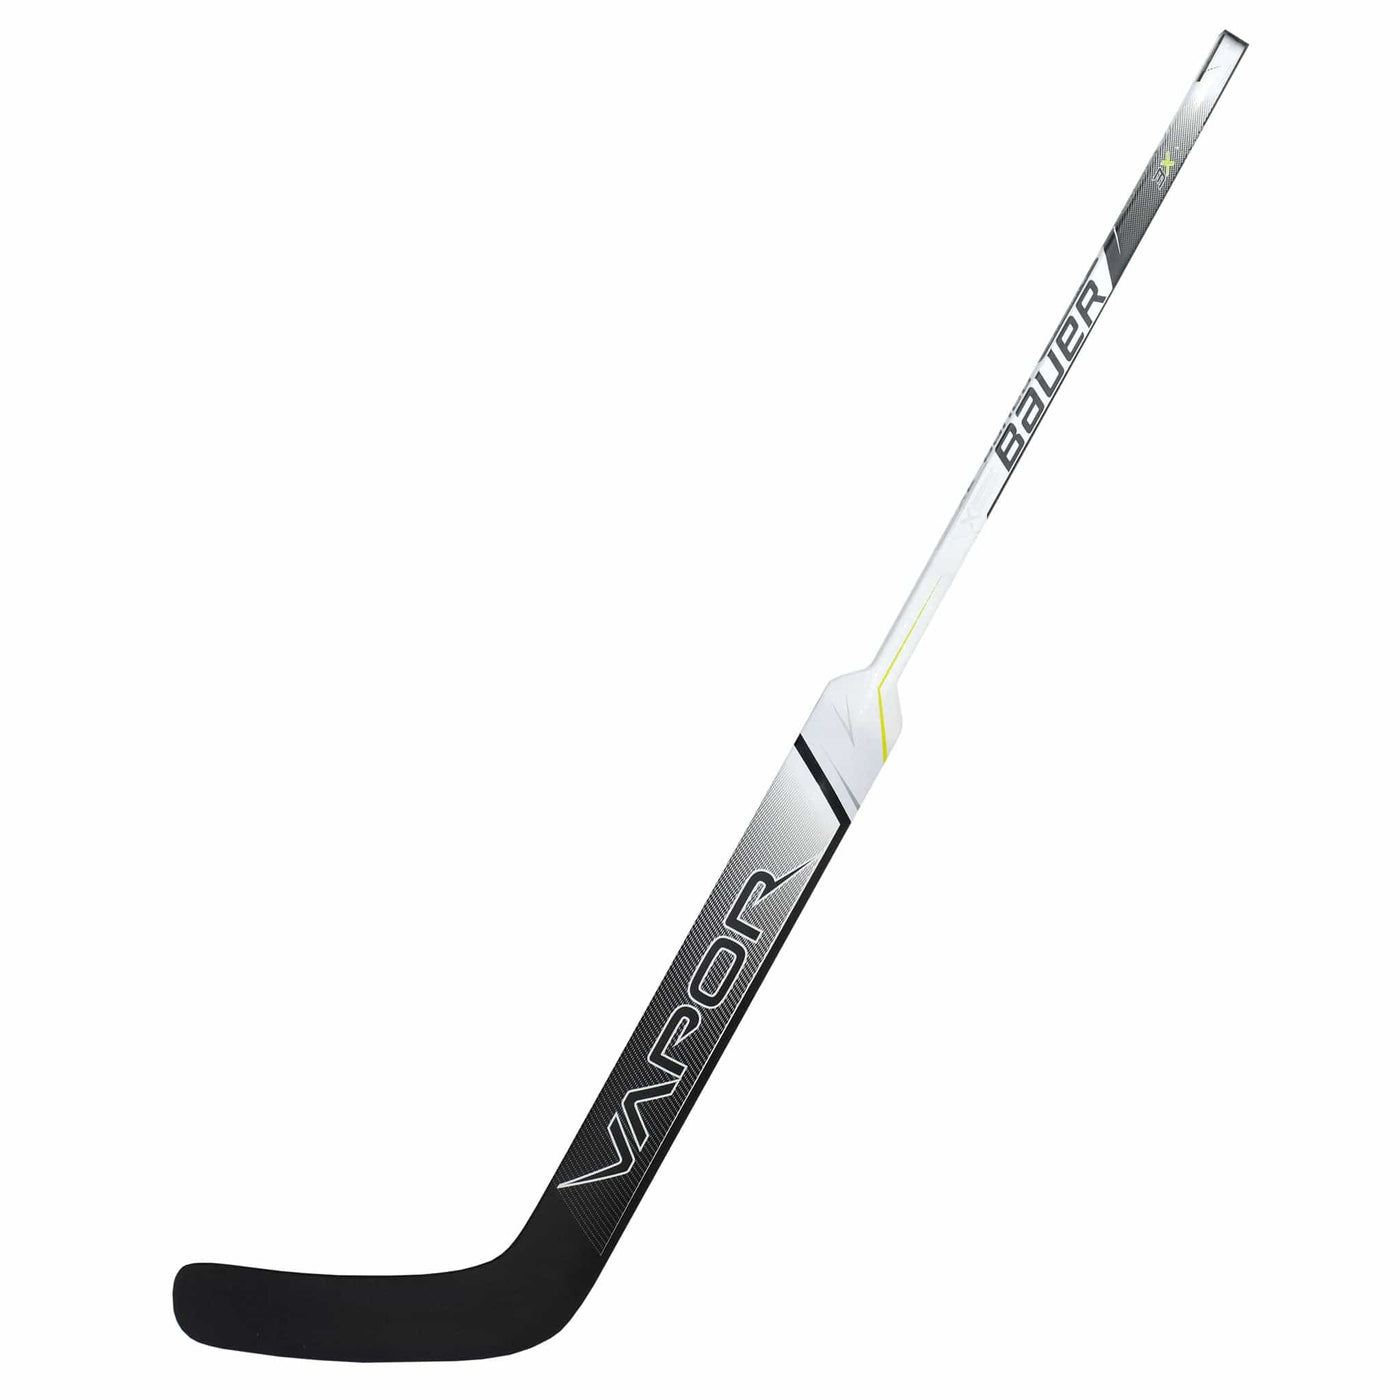 Bauer Vapor 3X Senior Goalie Stick - The Hockey Shop Source For Sports